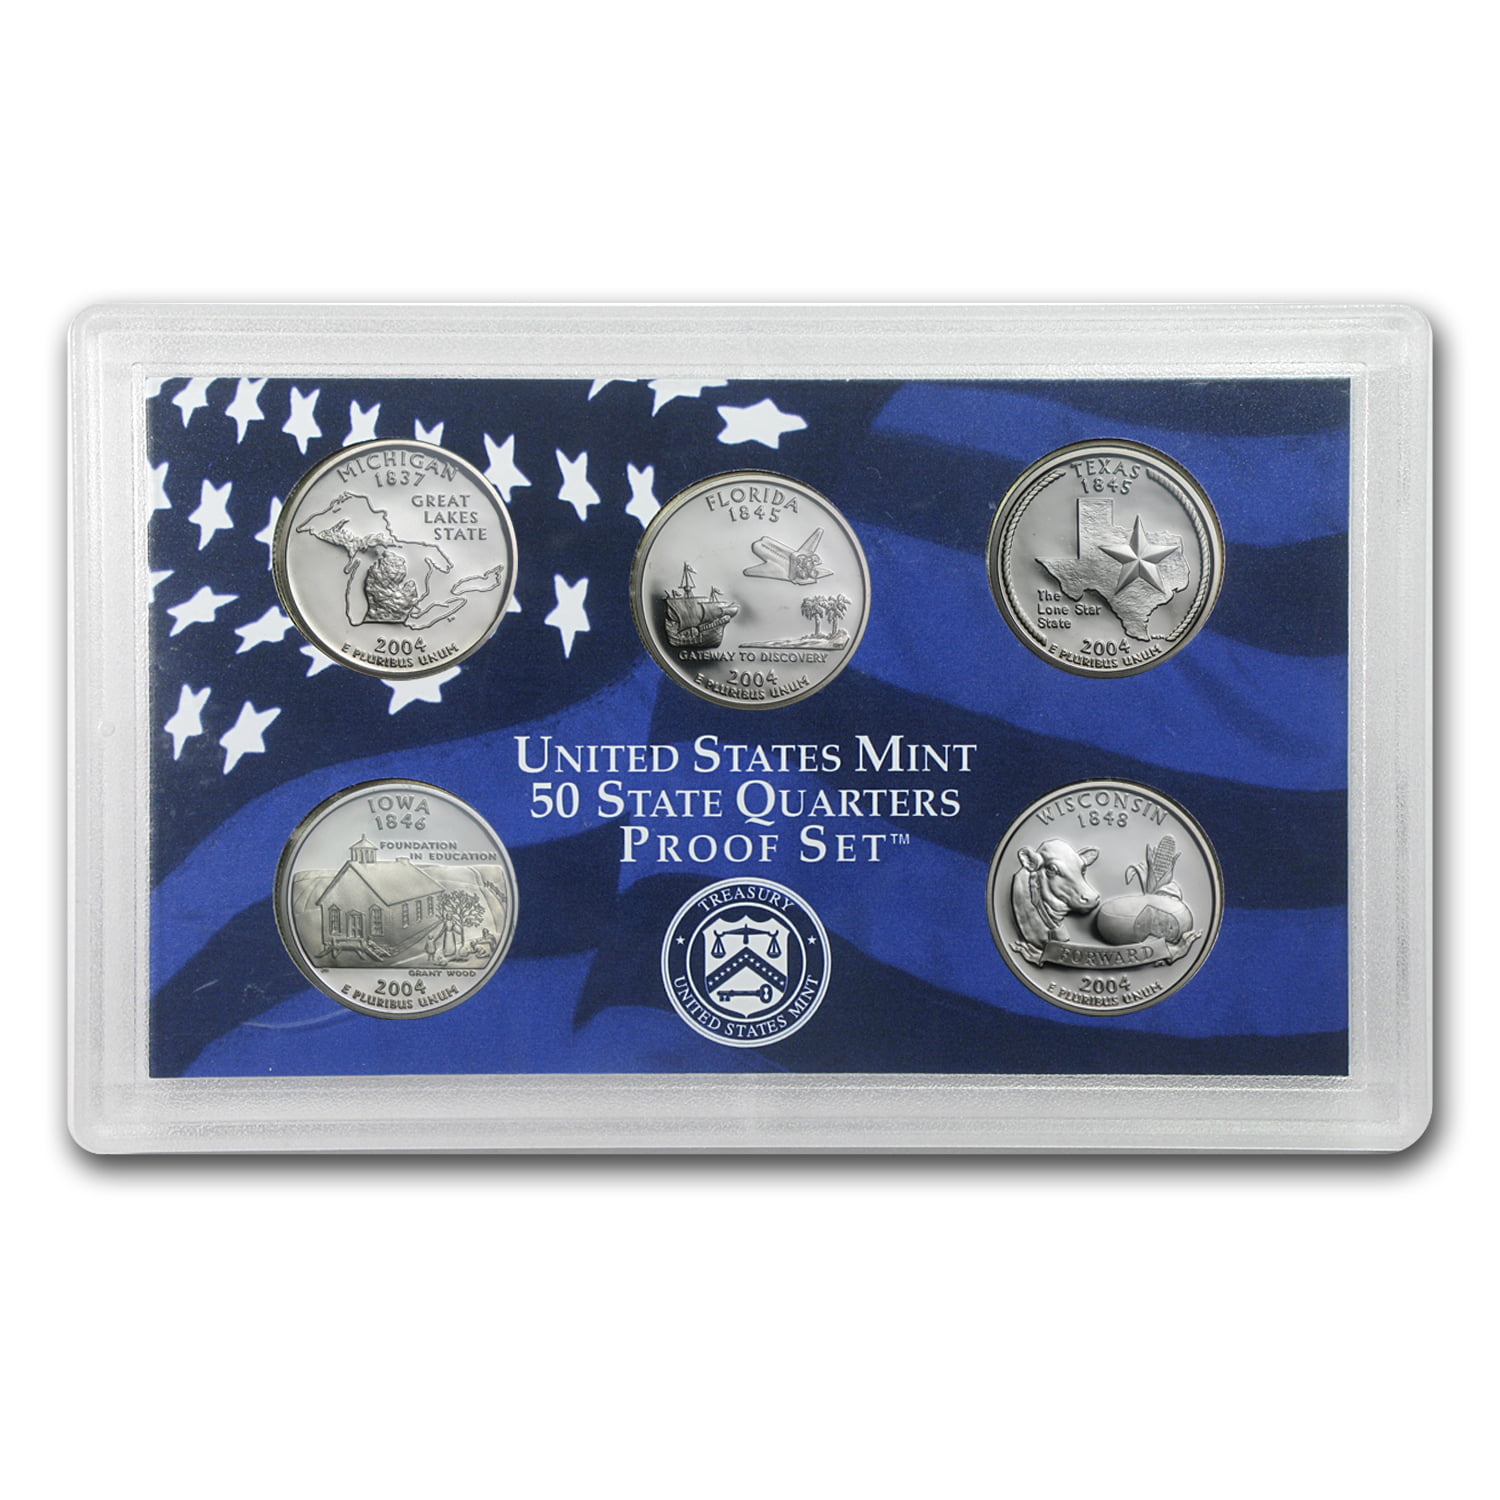 w/ State Quarters  box and COA Mint clad proof coin set 2004 U.S 